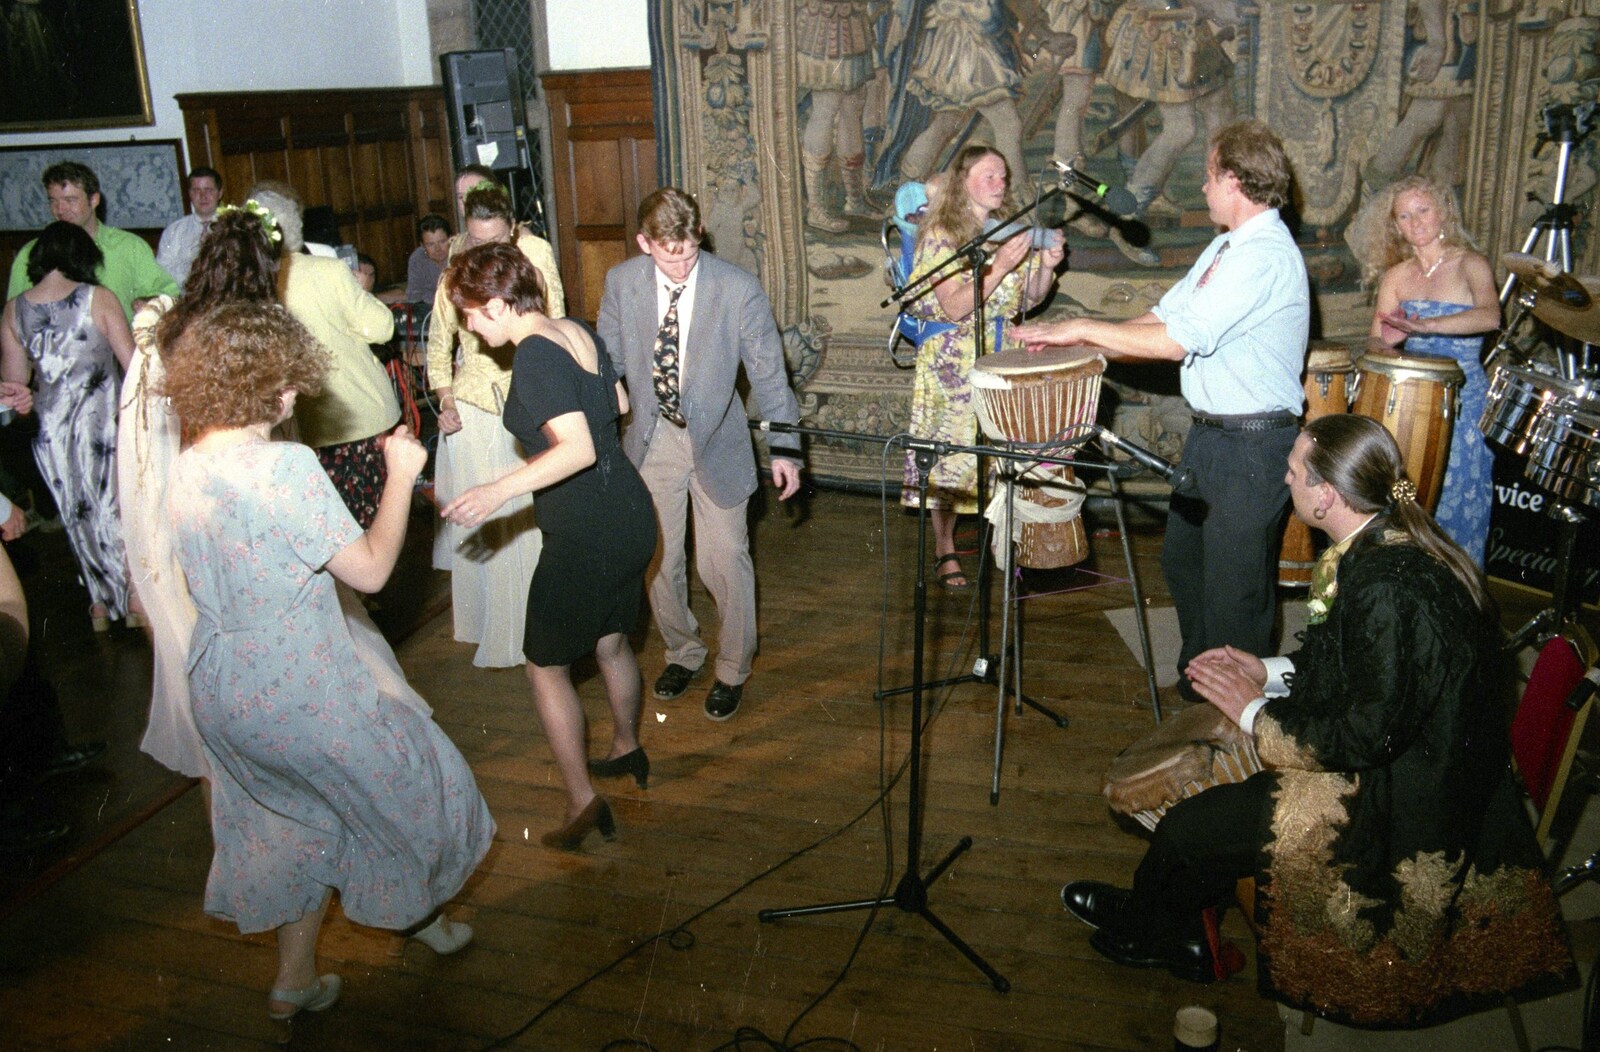 Stuart and Sarah's CISU Wedding, Naworth Castle, Brampton, Cumbria - 21st September 1996: Joe does some dancing